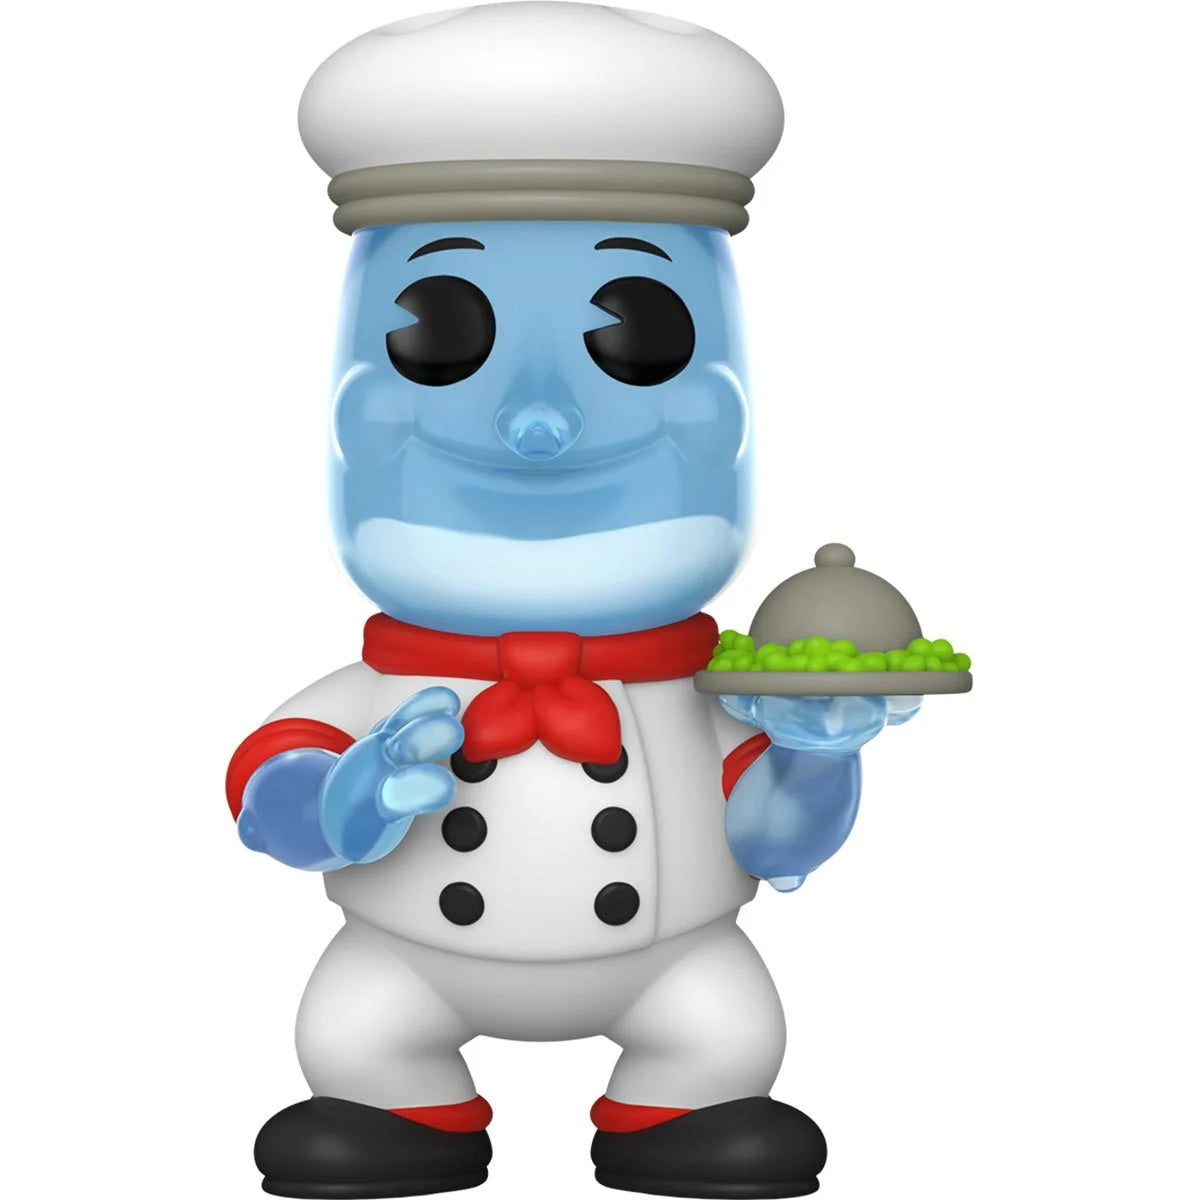 Funko Pop Games: Cuphead - Chef Saltbaker